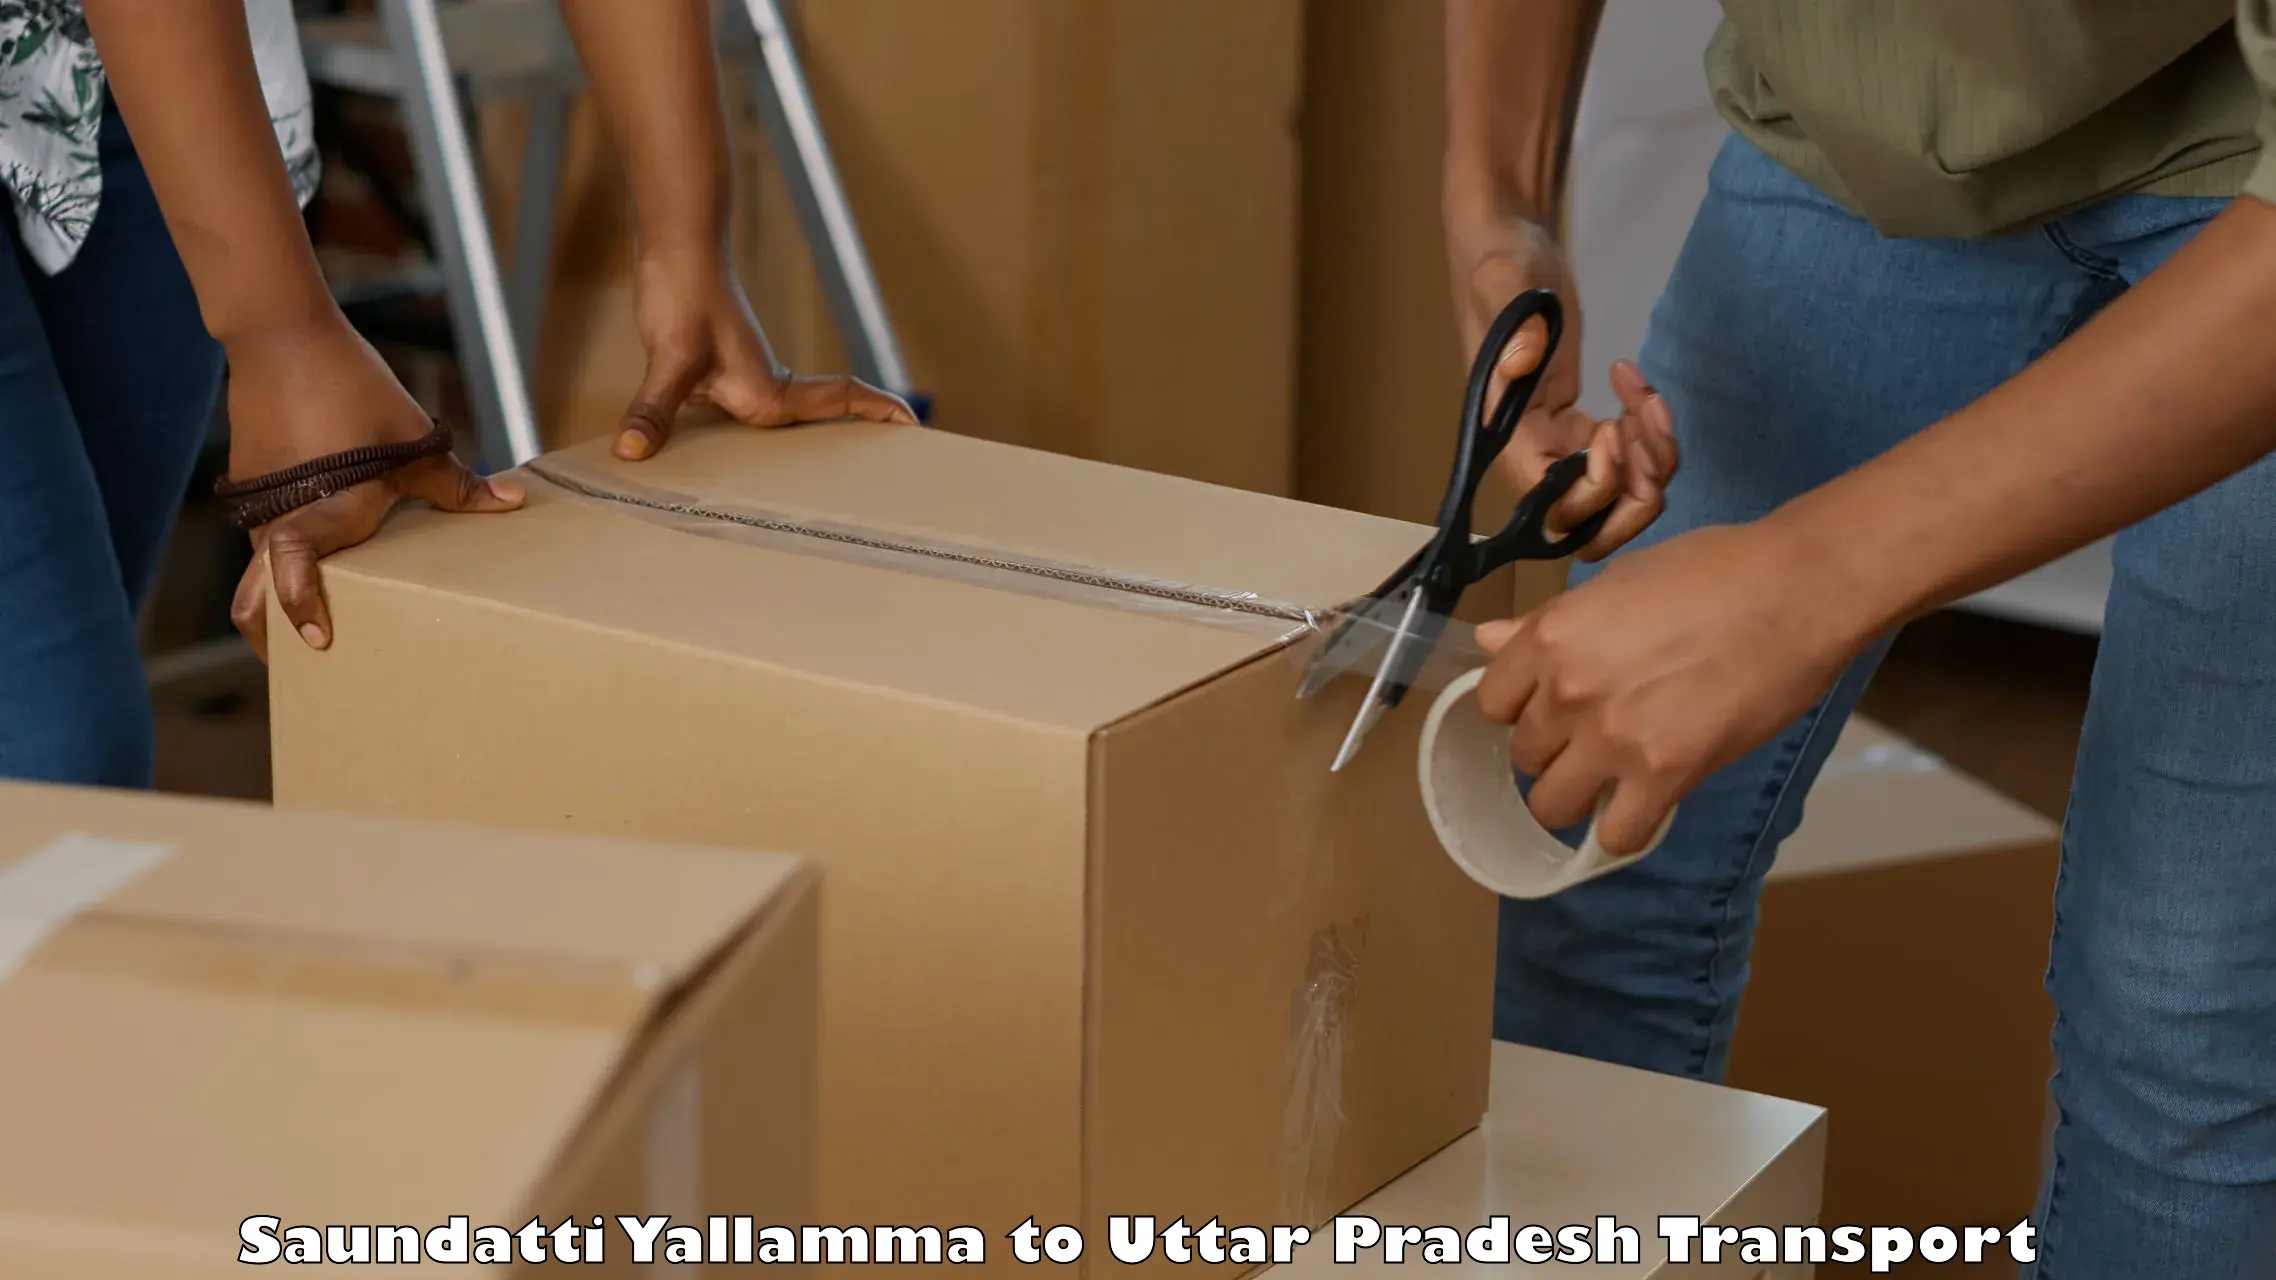 Delivery service Saundatti Yallamma to Khurja